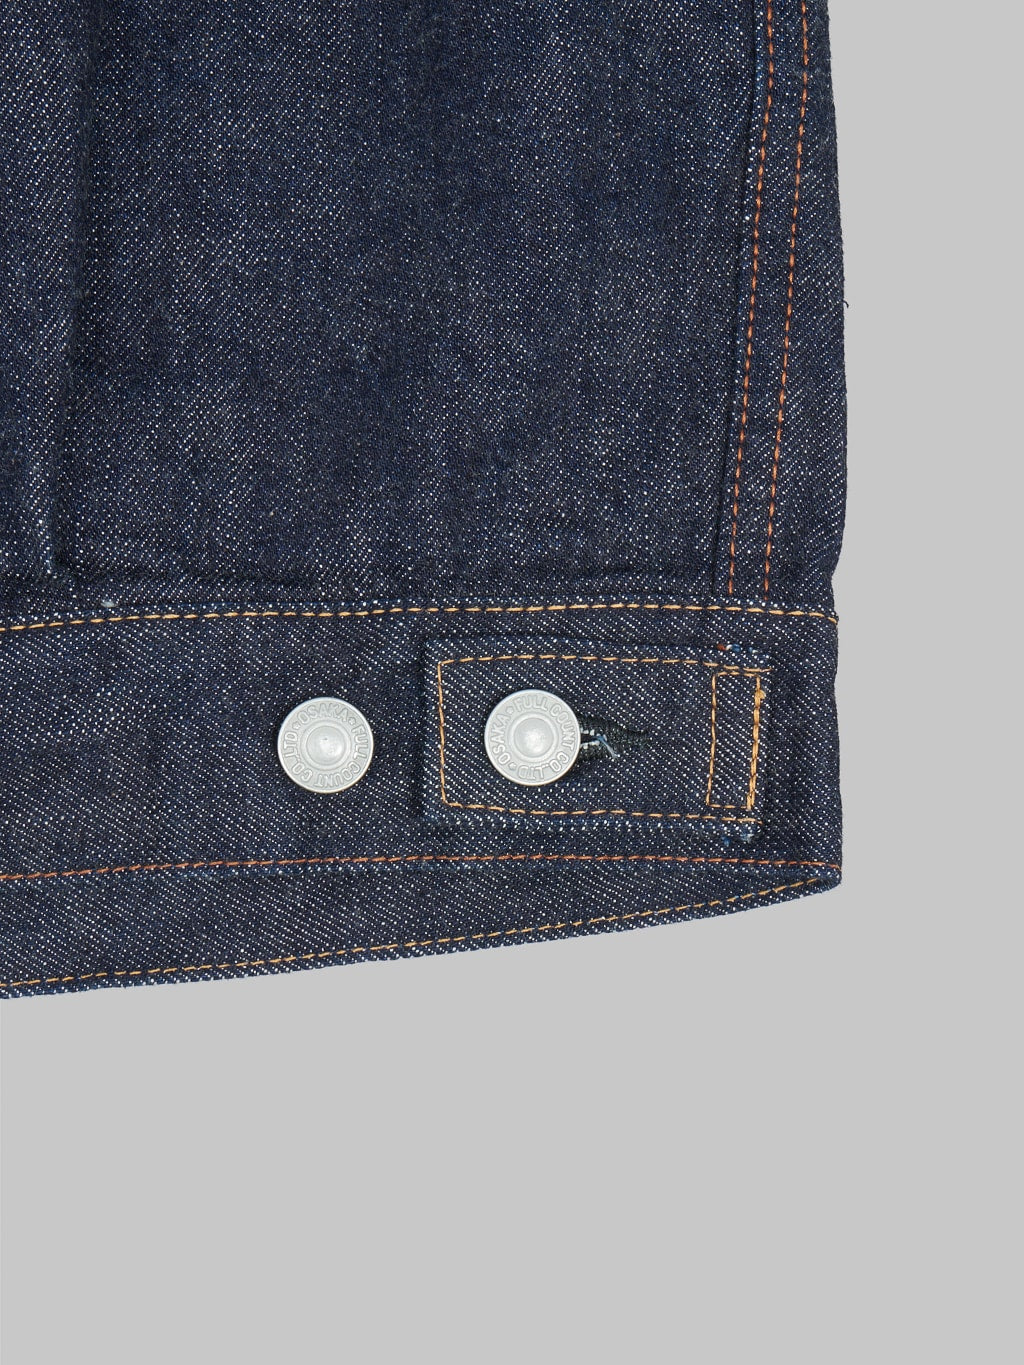 fullcount 2102 type 2 denim jacket selvedge waist buttons